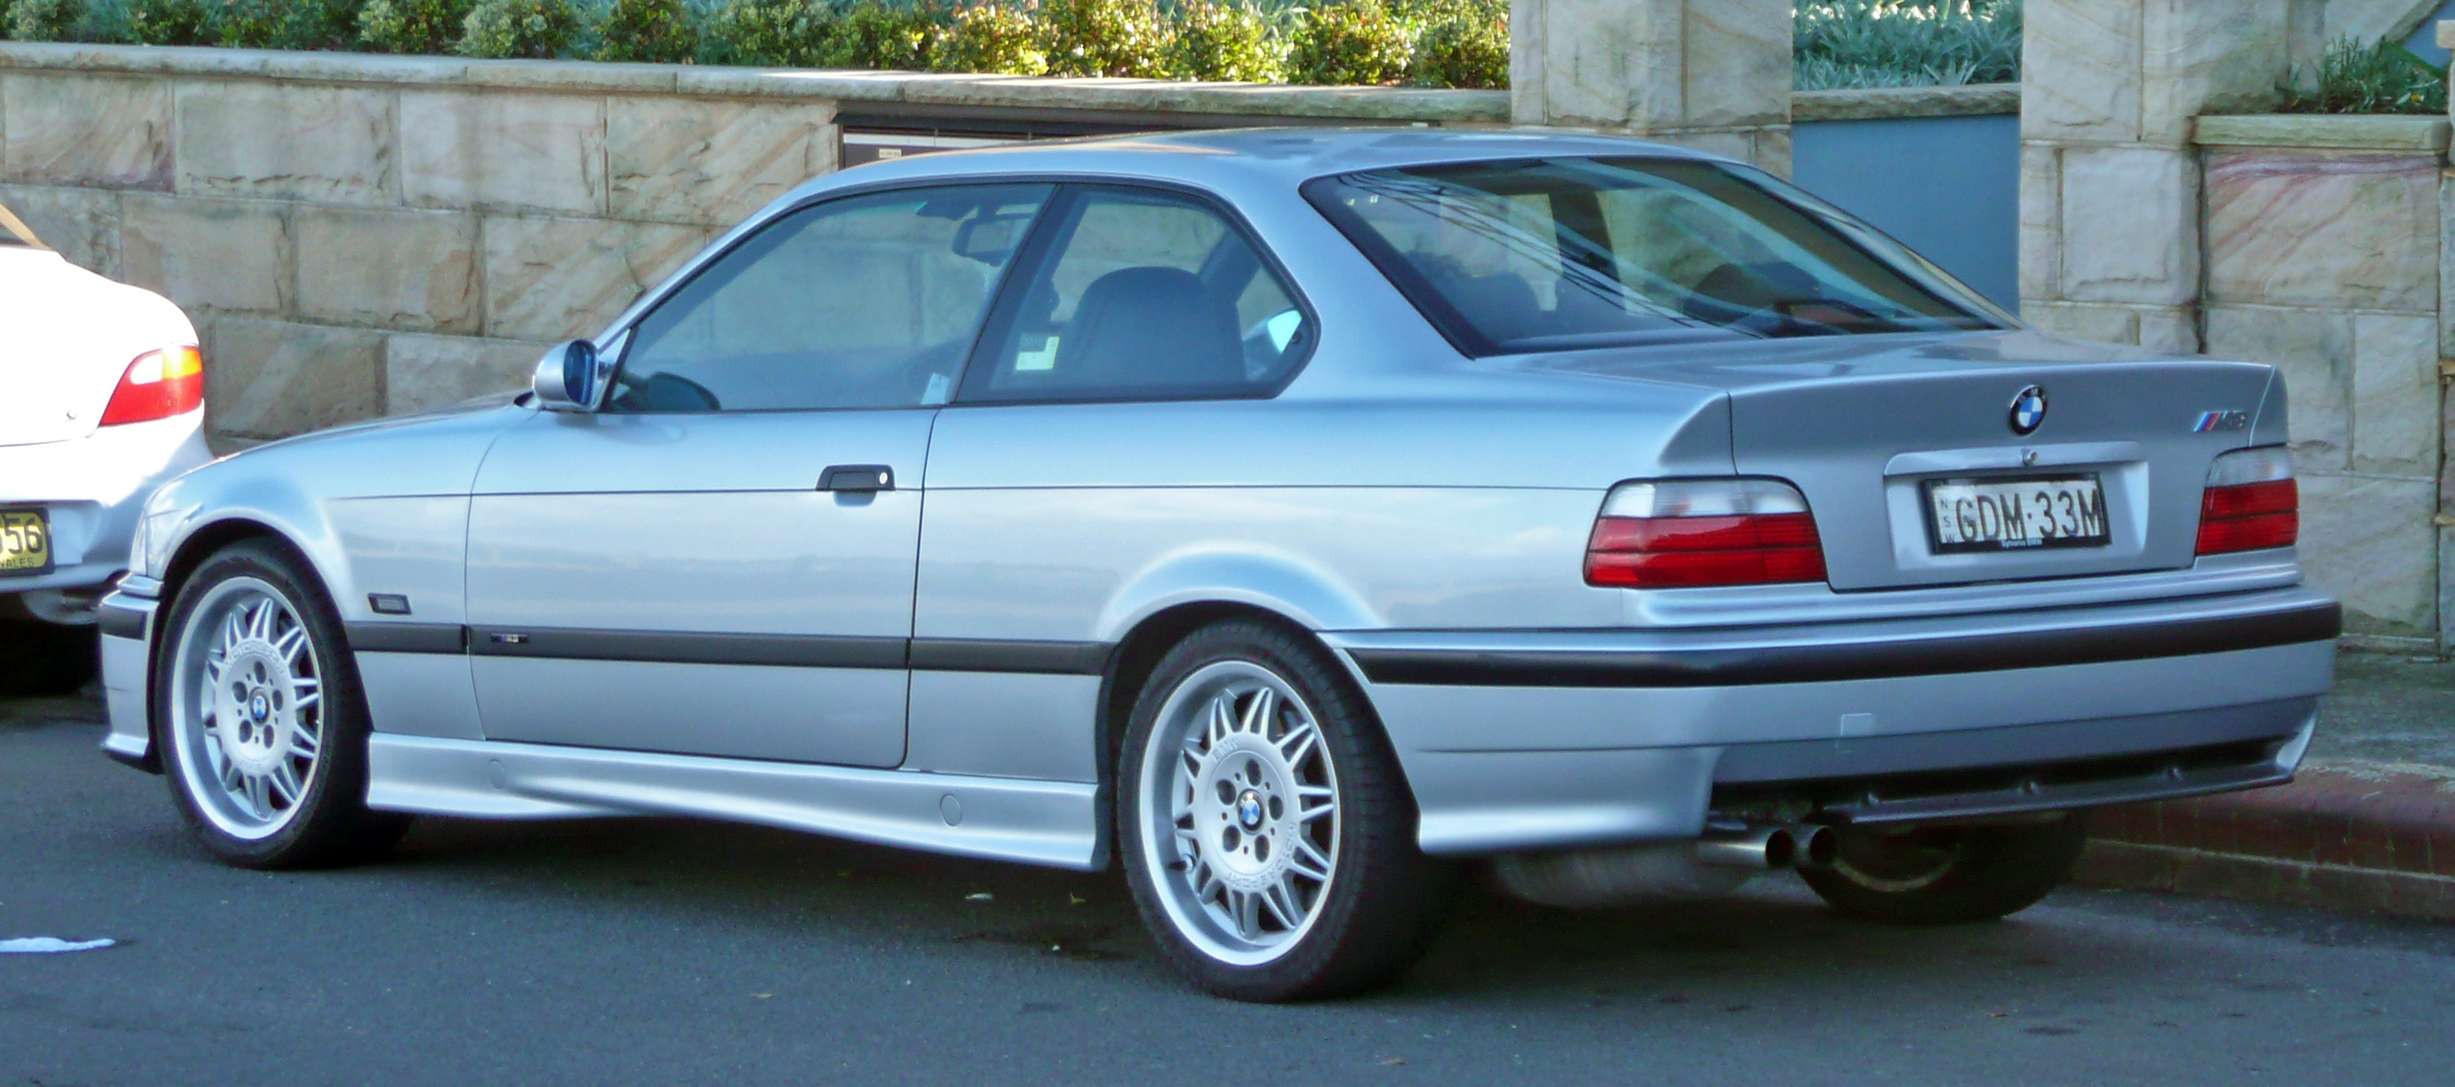 BMW 1999 #7062039